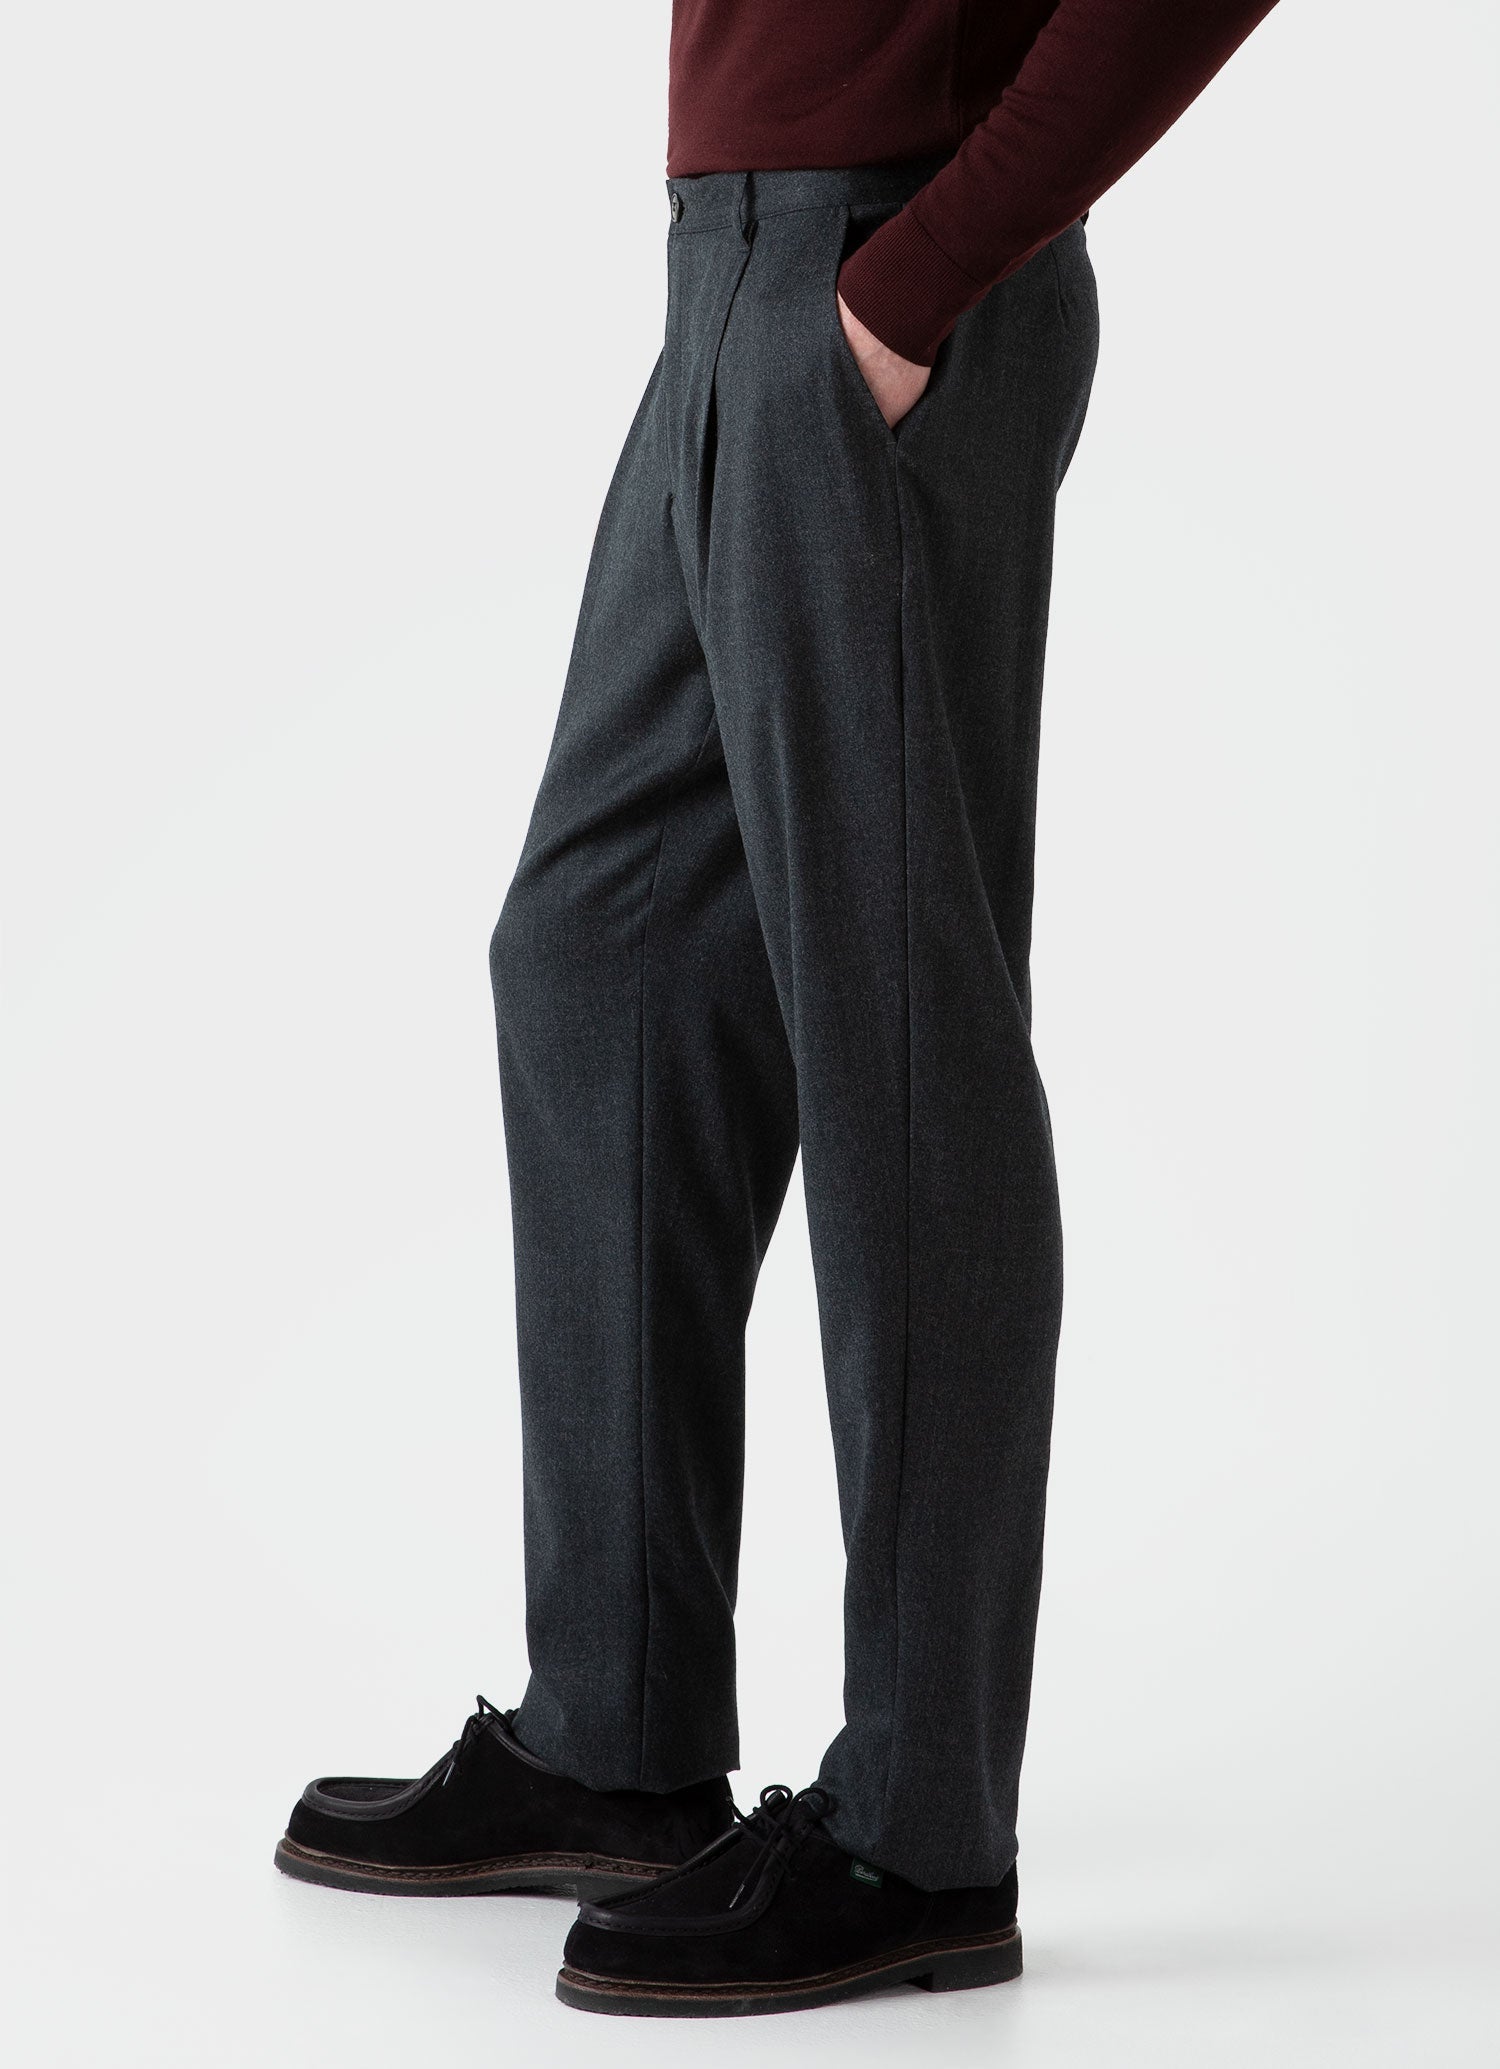 Buy Peter England Men Grey Textured Slim Fit Formal Trousers online